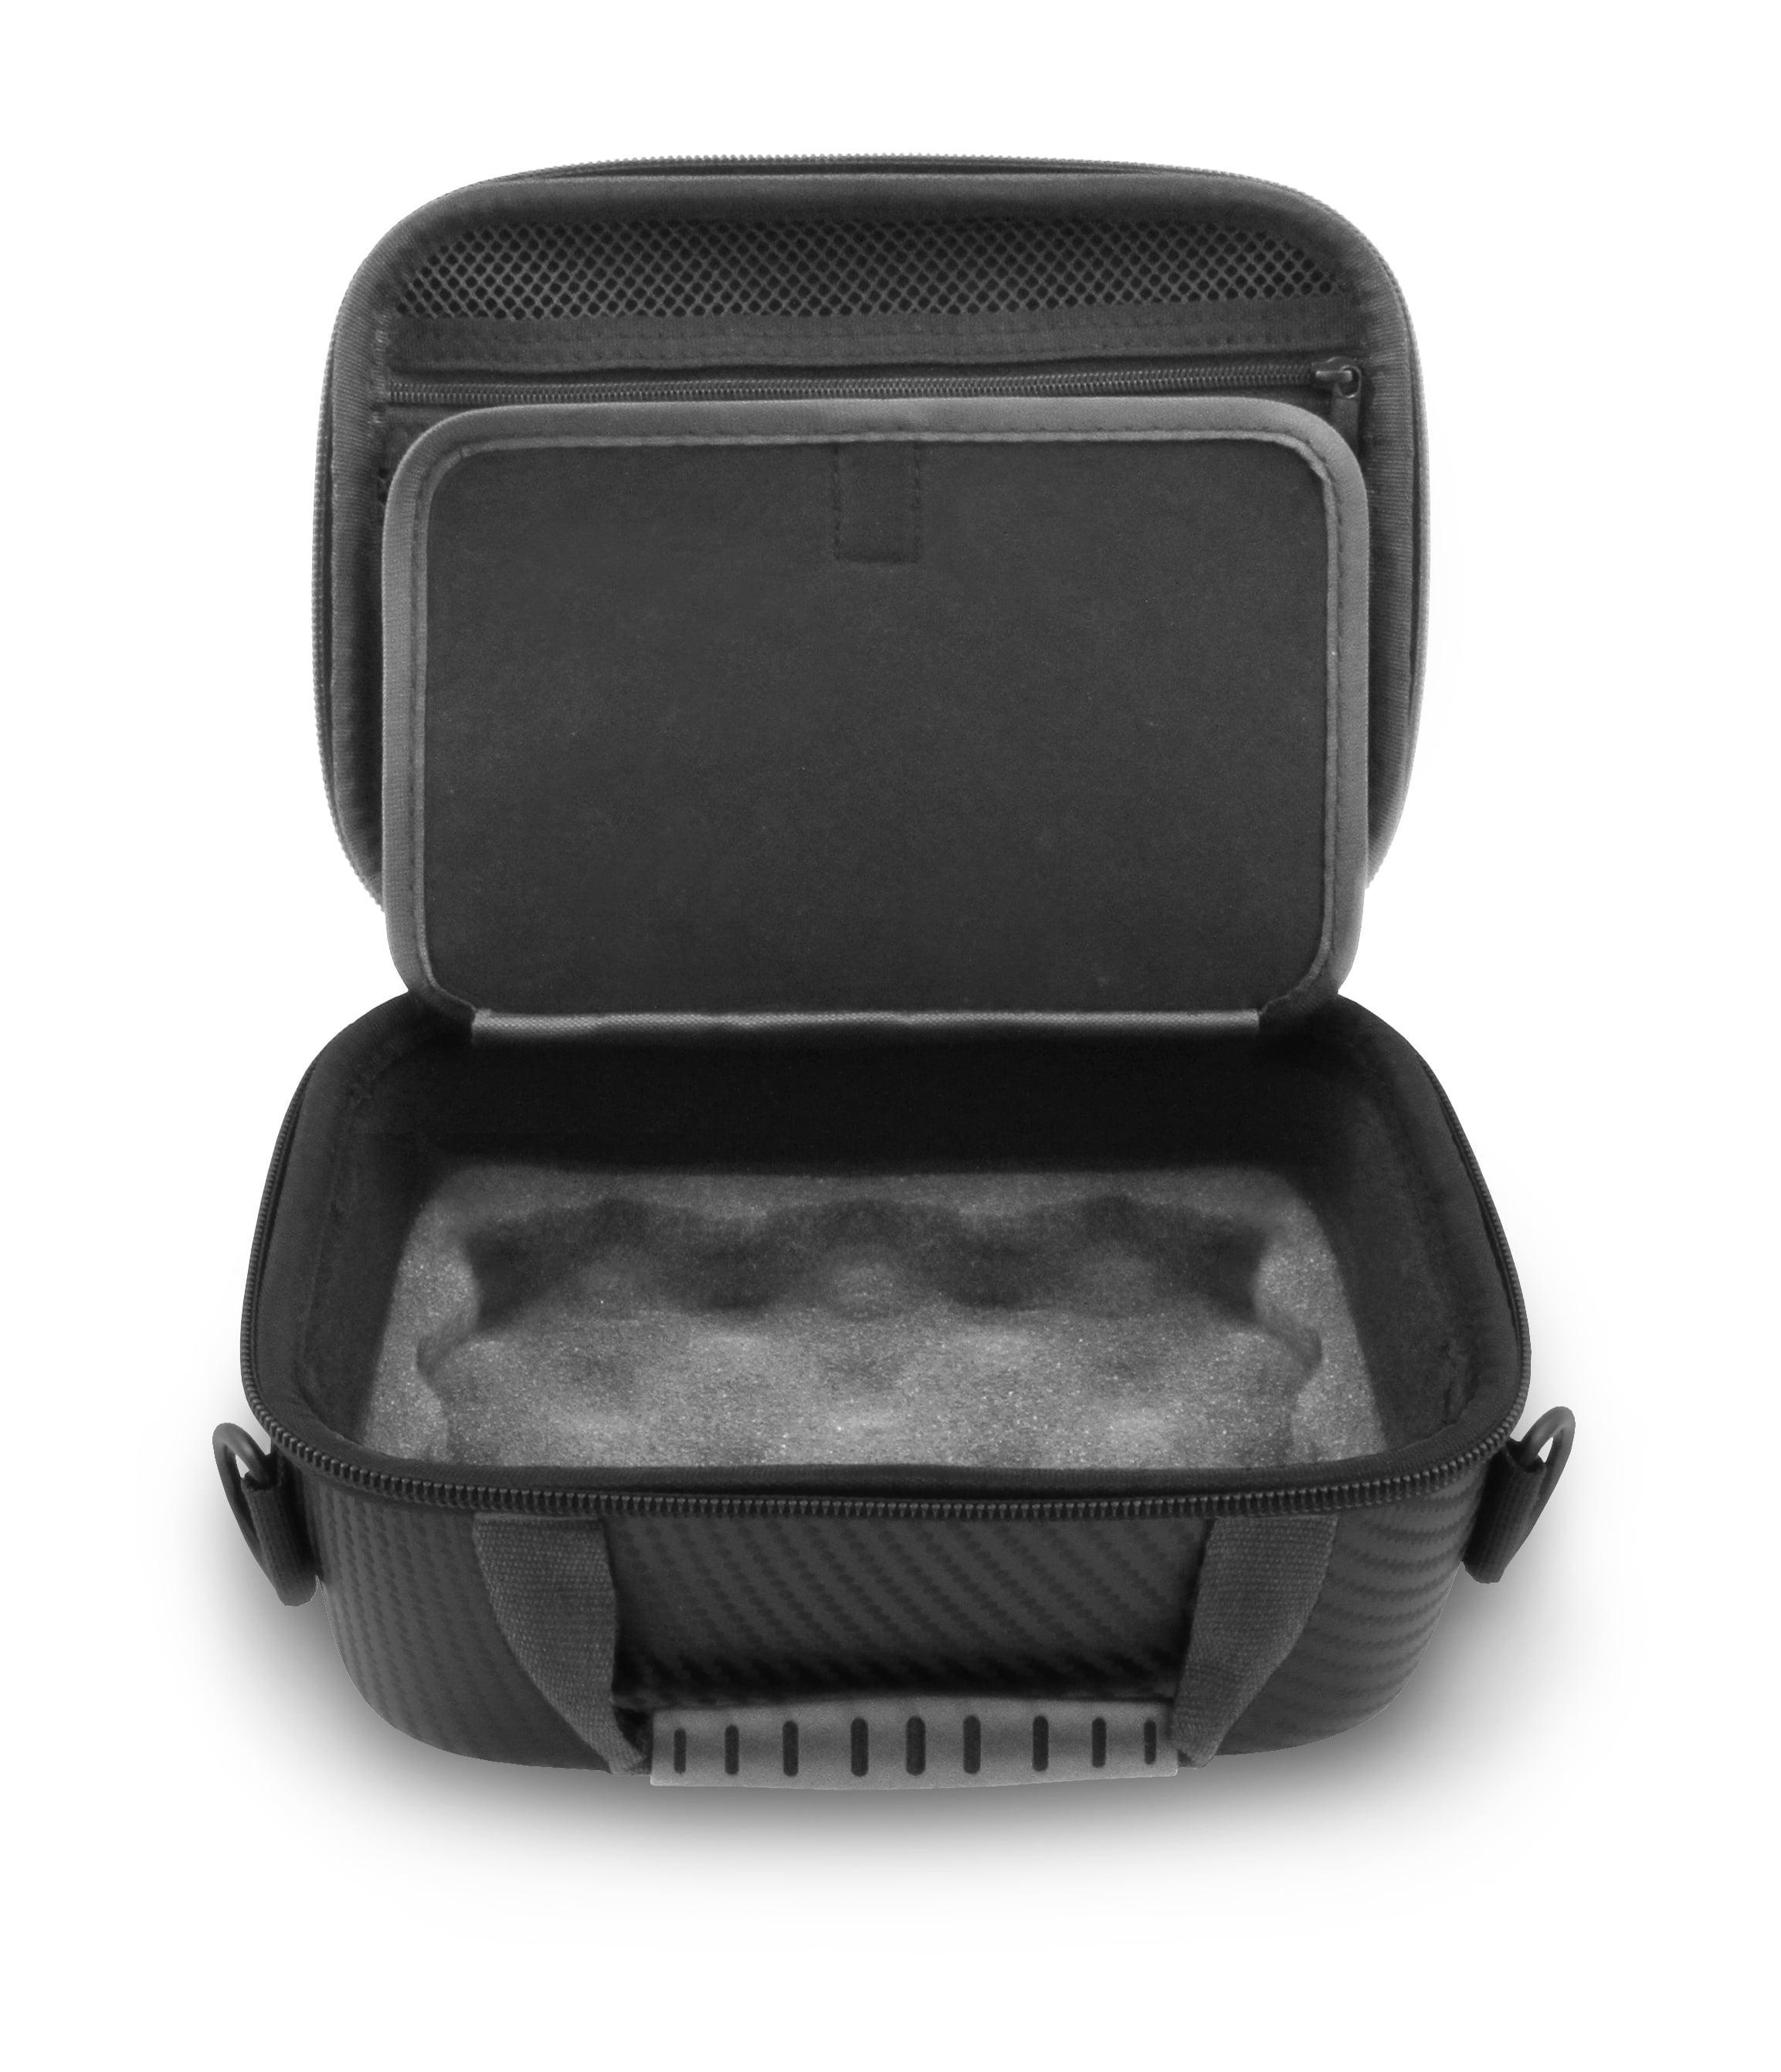 FOXWELL Hard EVA Case Storage Bag for Car Code Reader Scanner Earphone Travel US 